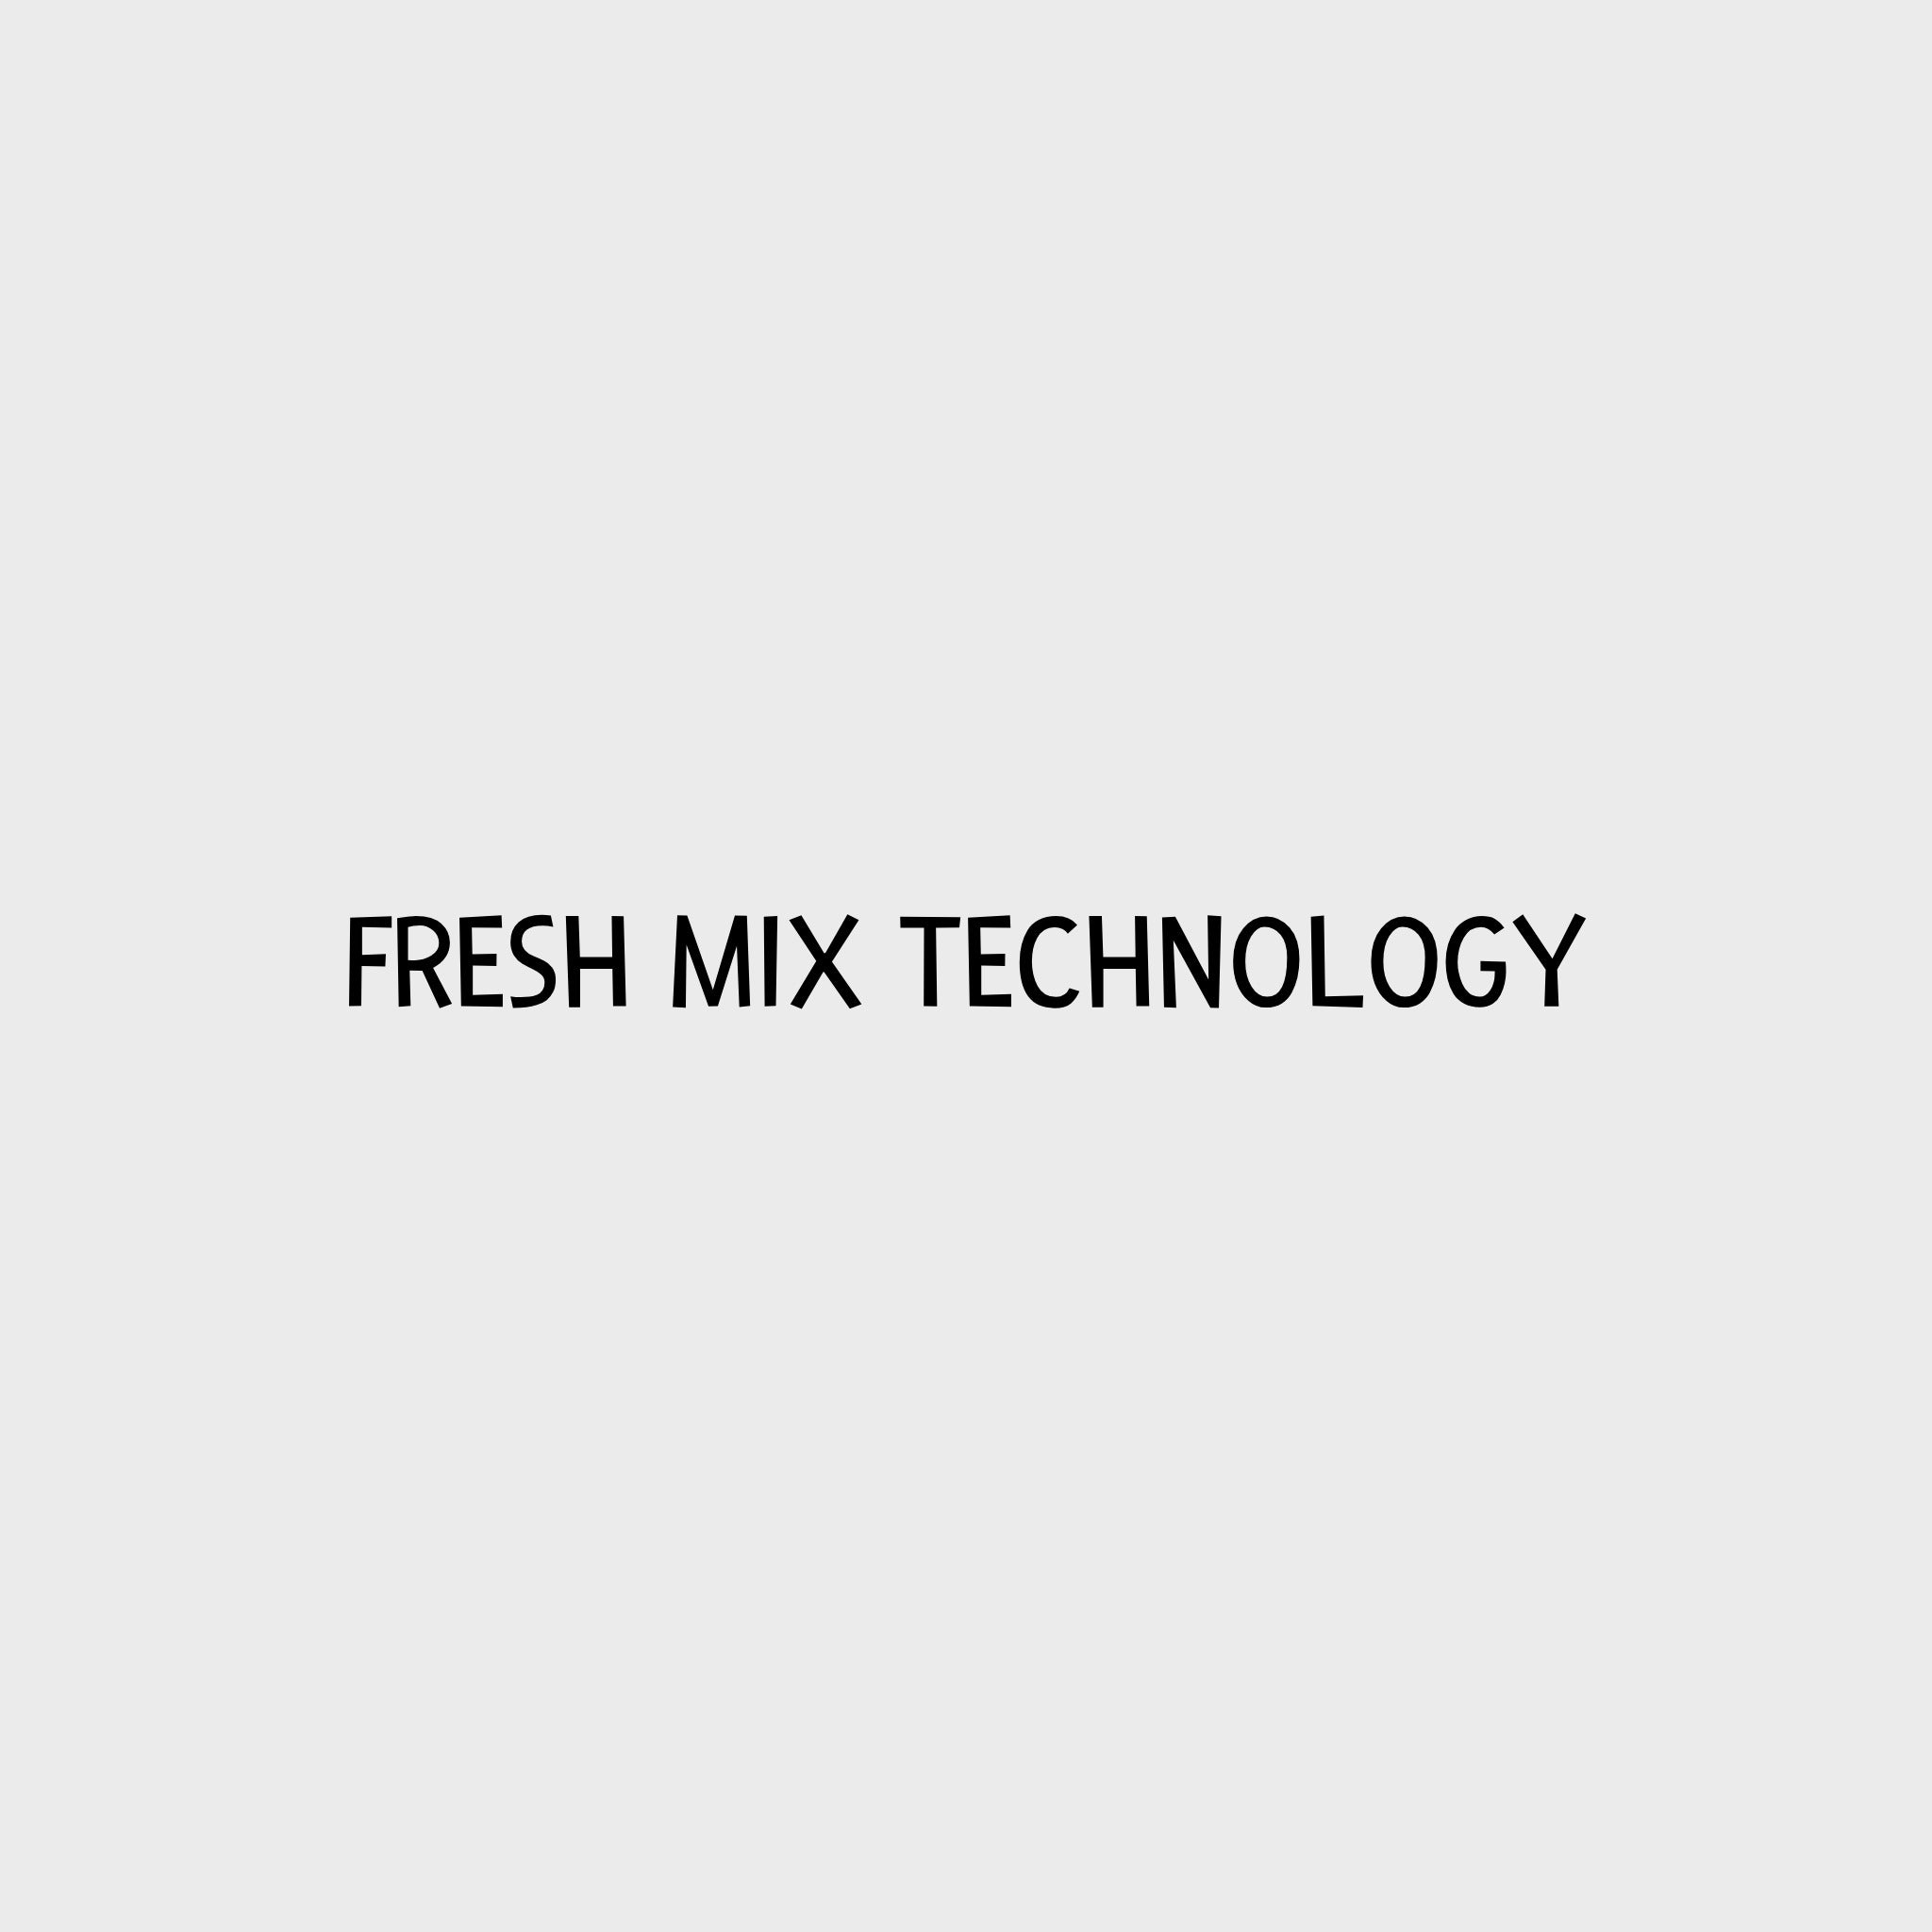 Video - Fresh Mix Technology The Goodstuff